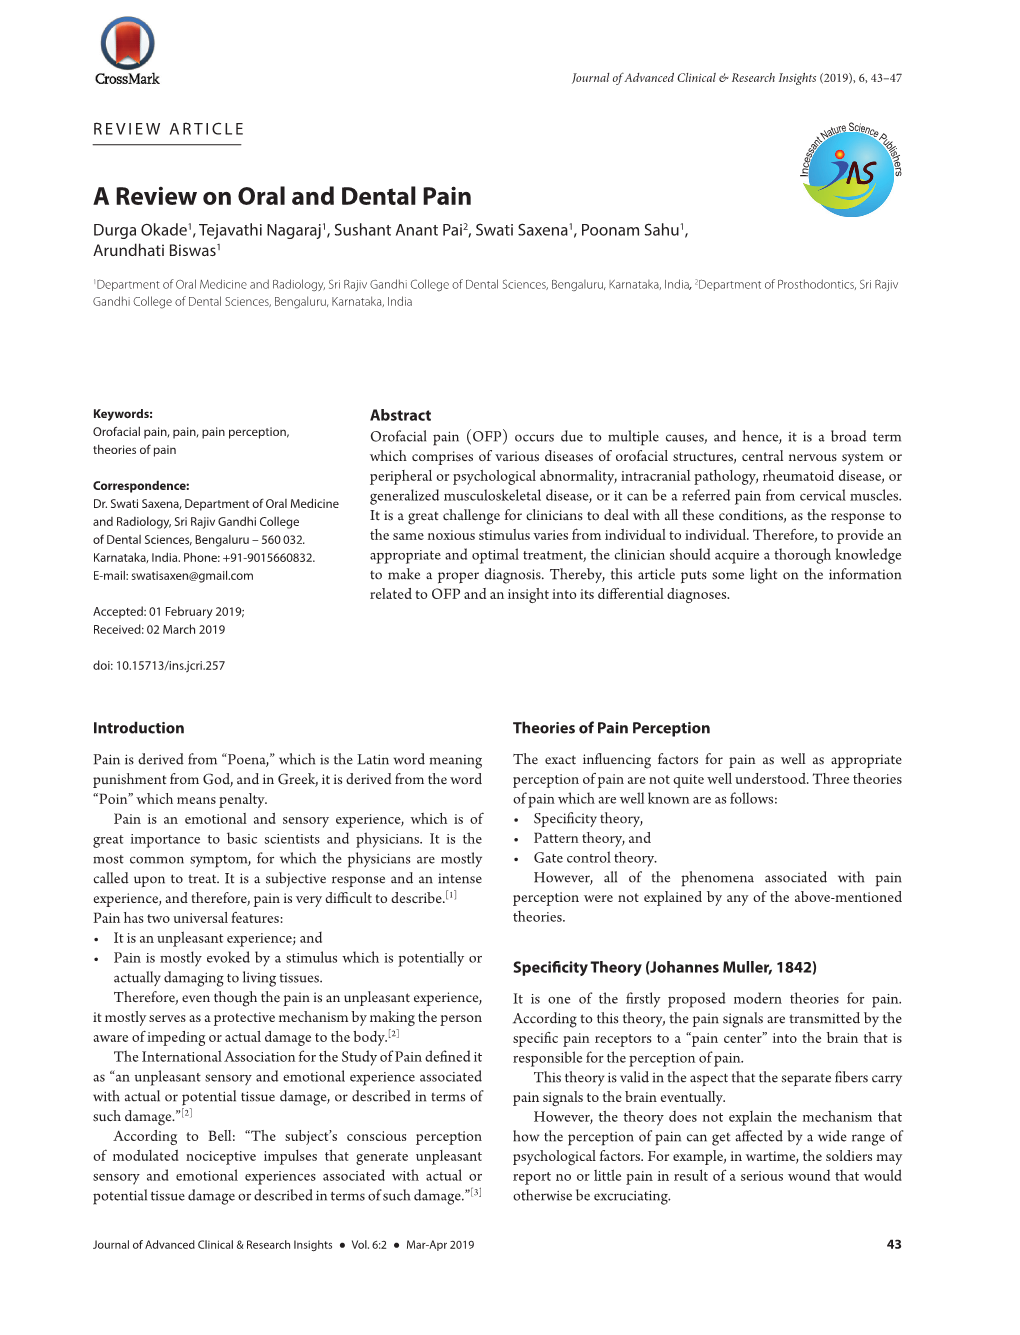 A Review on Oral and Dental Pain Durga Okade1, Tejavathi Nagaraj1, Sushant Anant Pai2, Swati Saxena1, Poonam Sahu1, Arundhati Biswas1